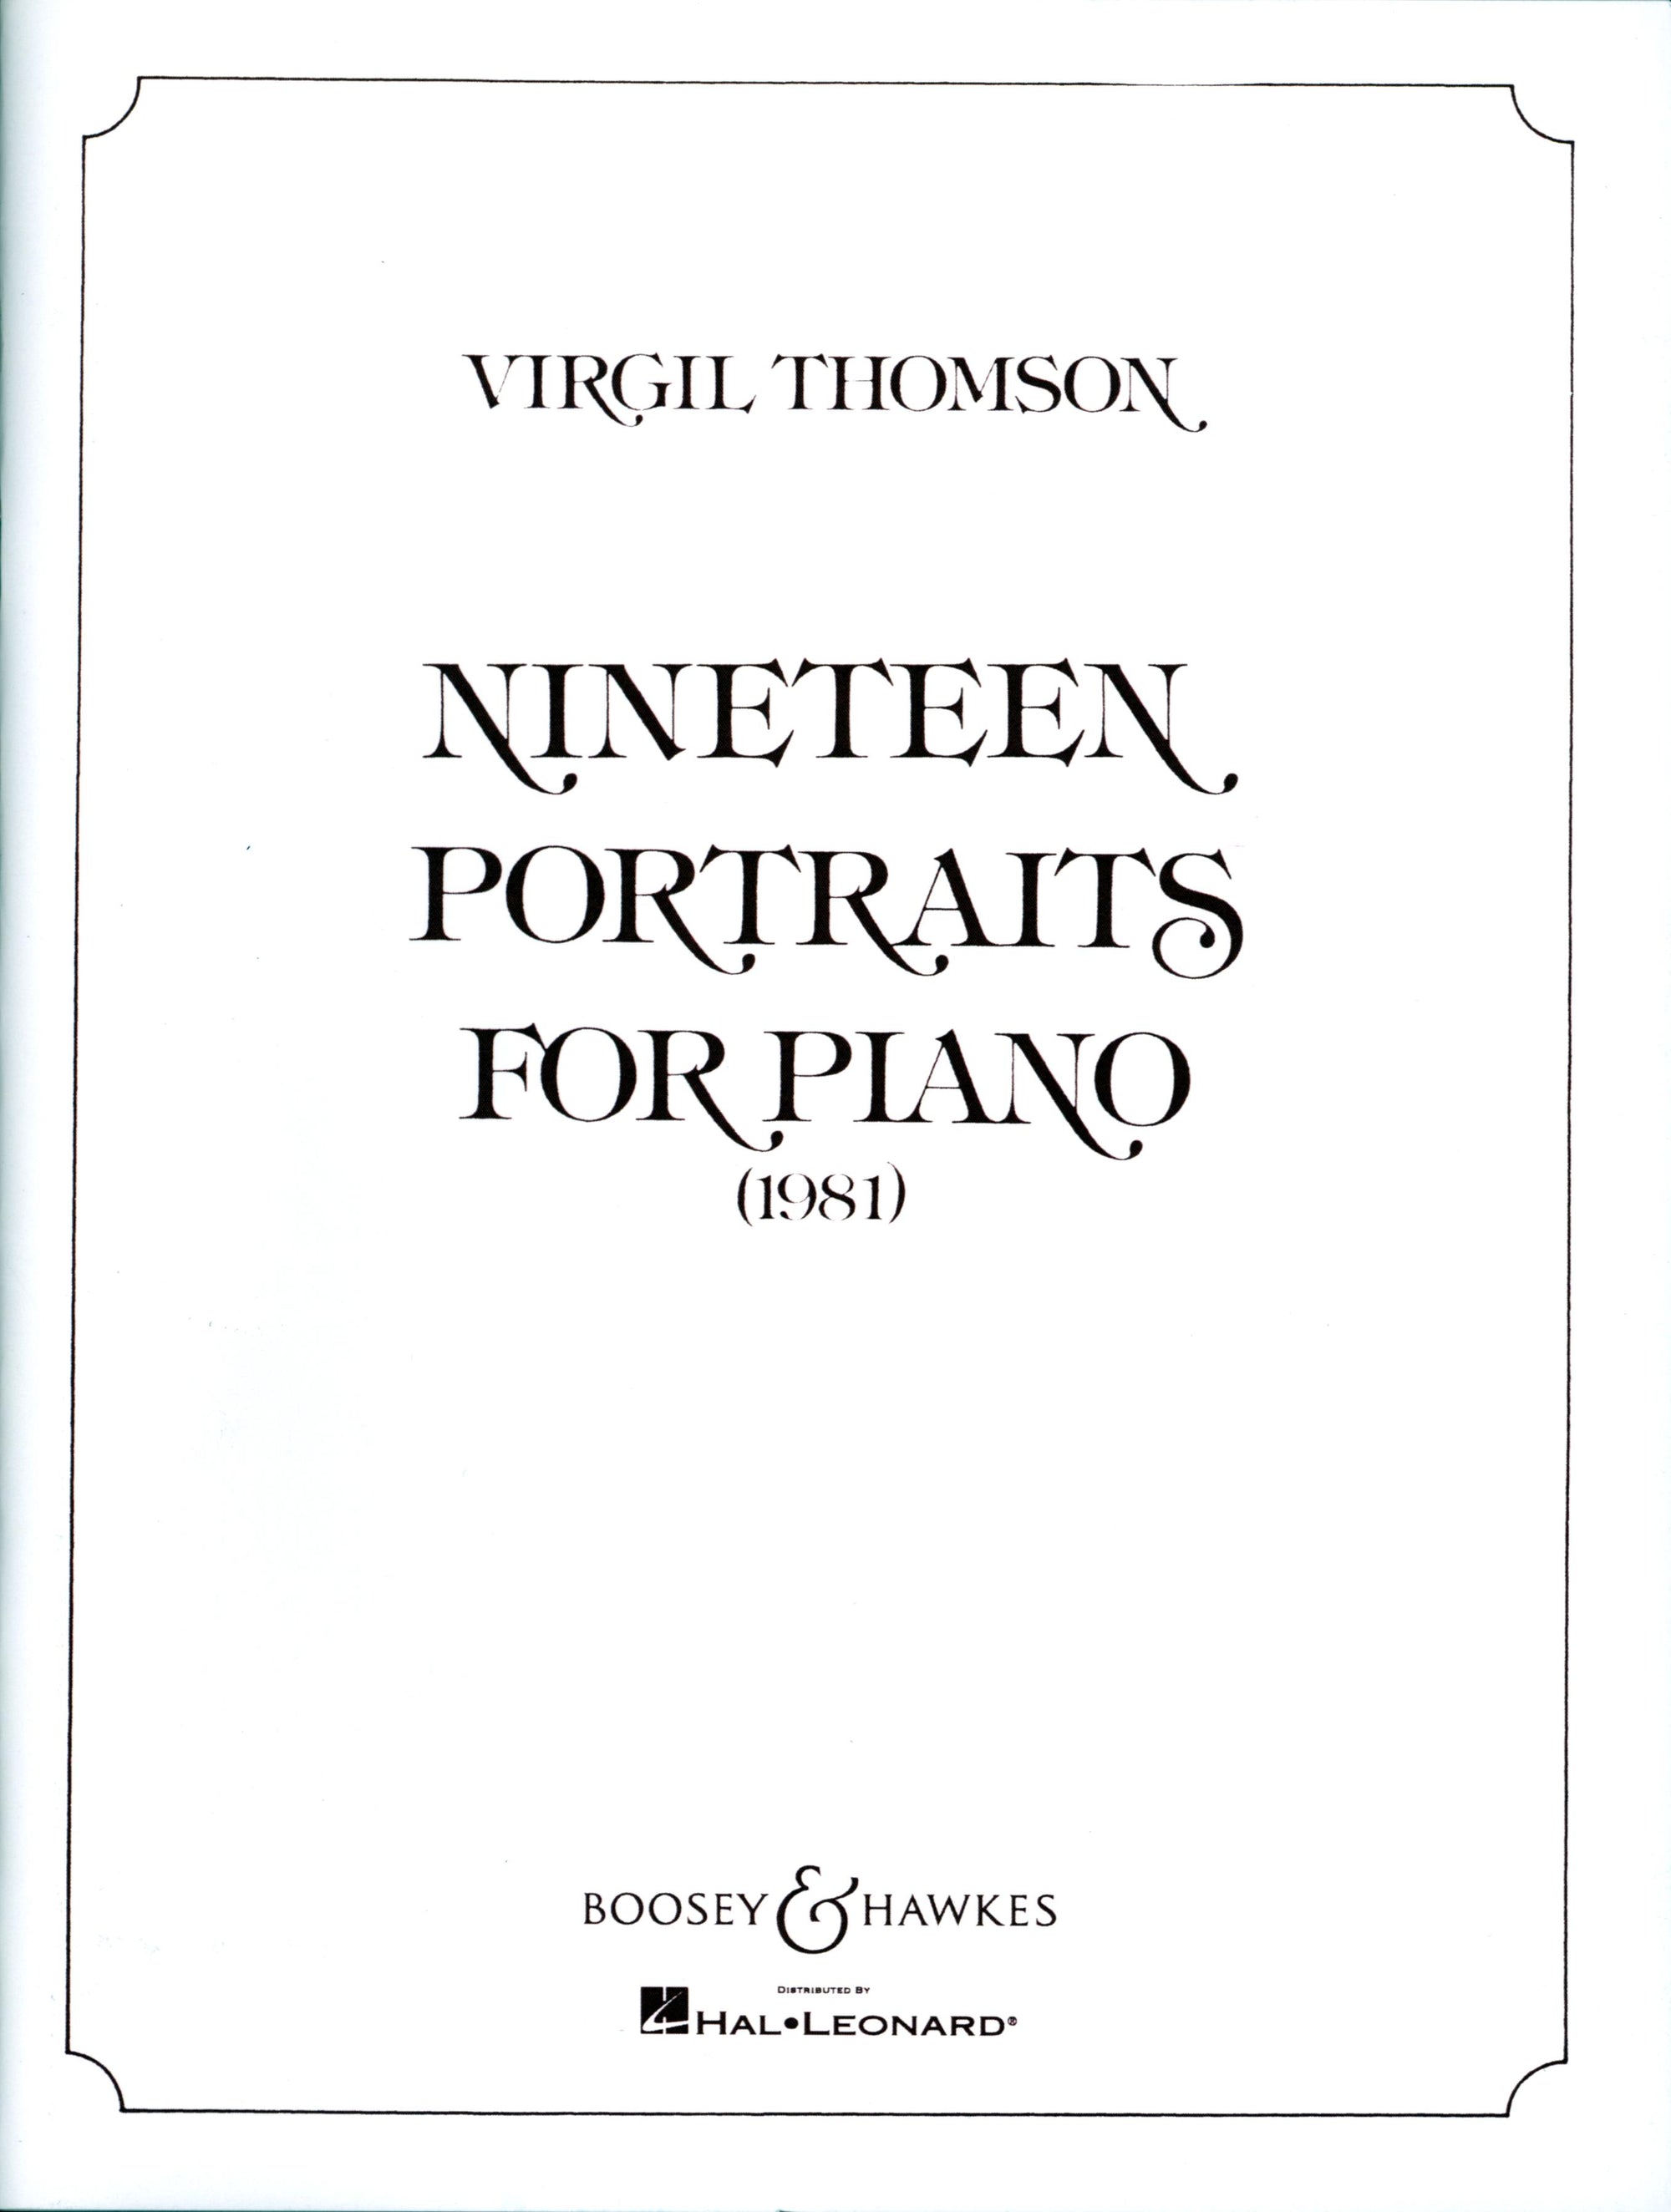 Thomson: 19 Portraits